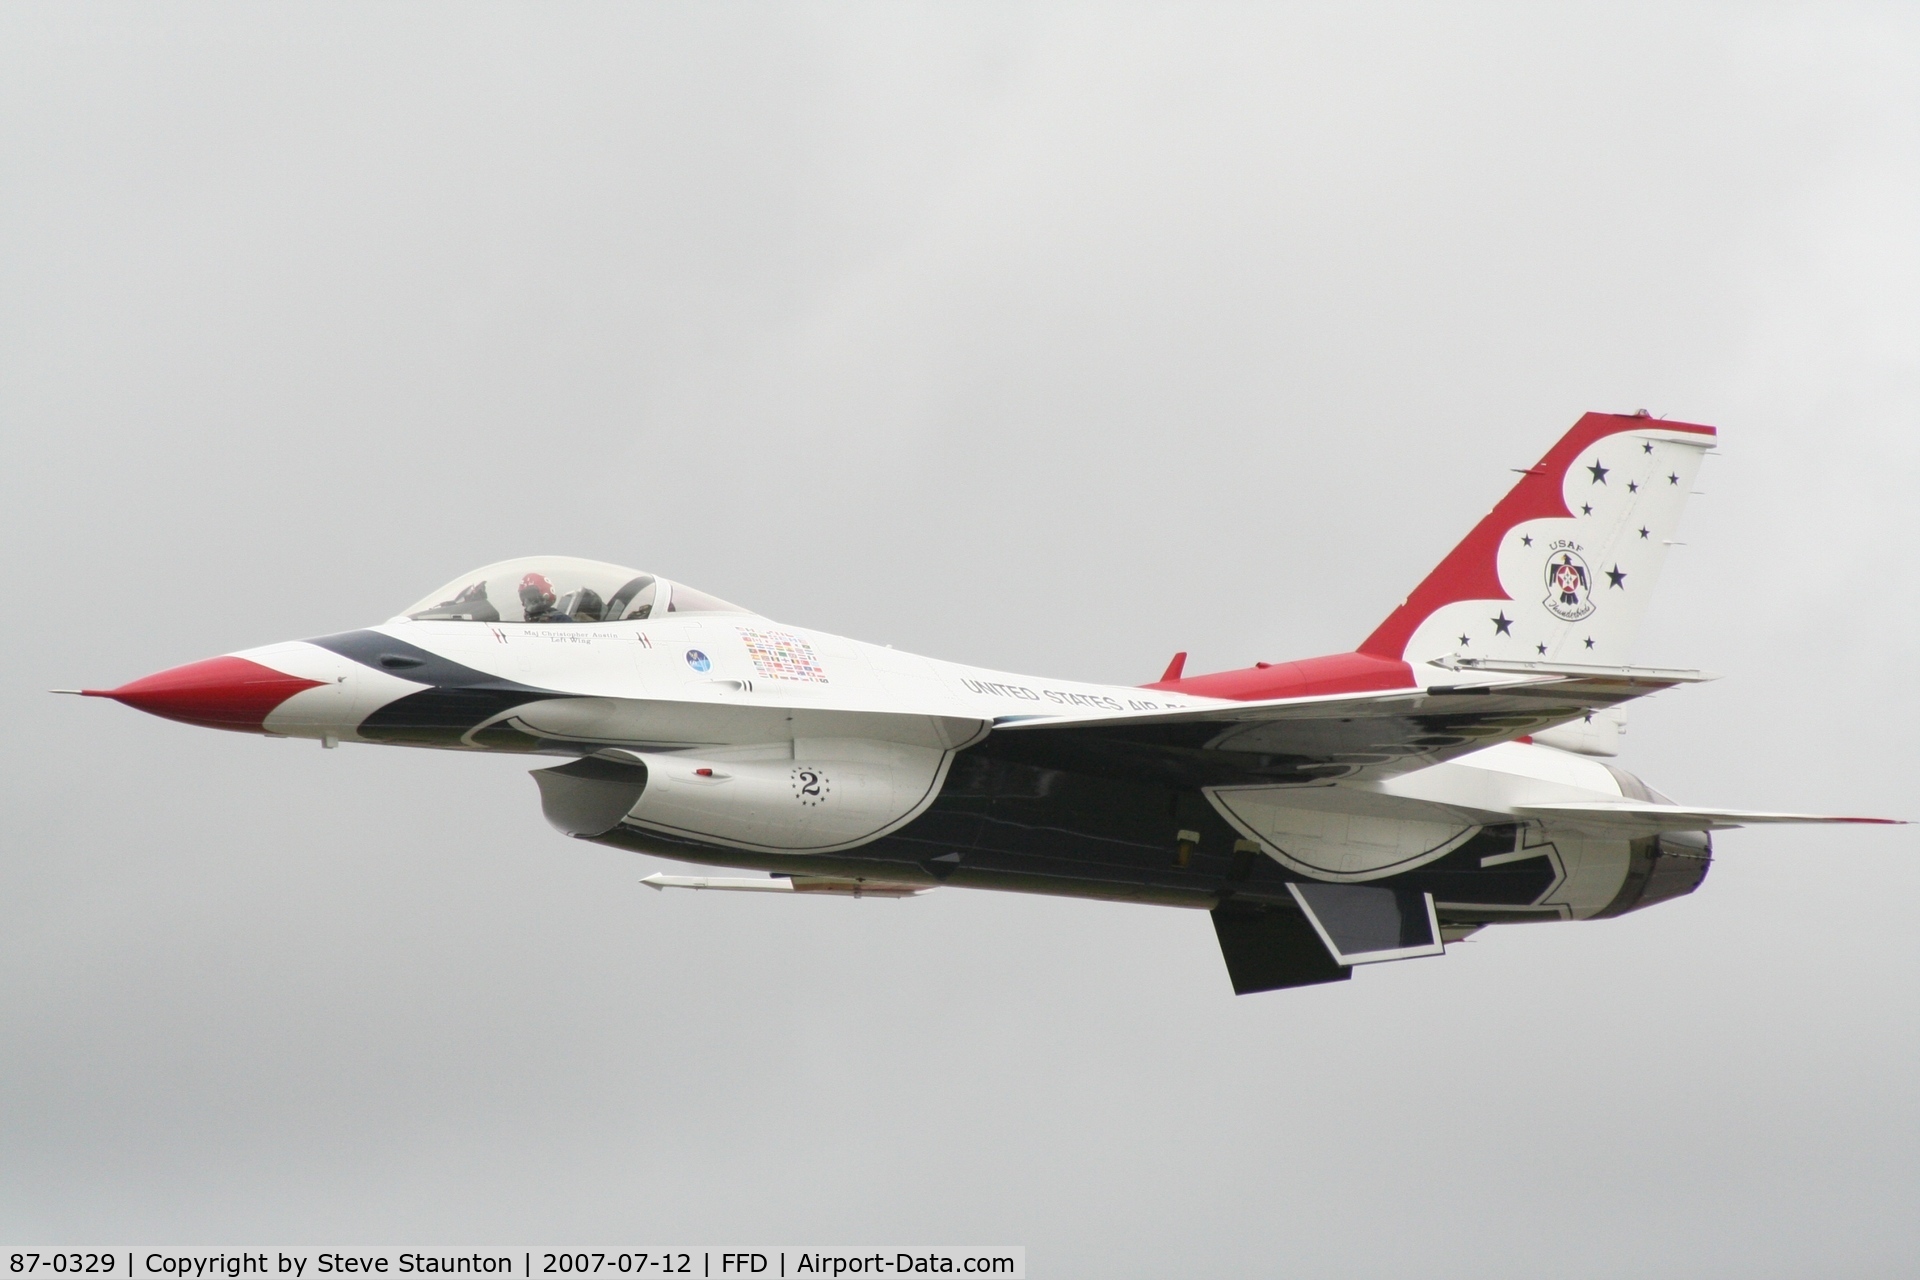 87-0329, 1987 General Dynamics F-16C Fighting Falcon C/N 5C-590, Thunderbirds practice at Royal International Air Tattoo 2007